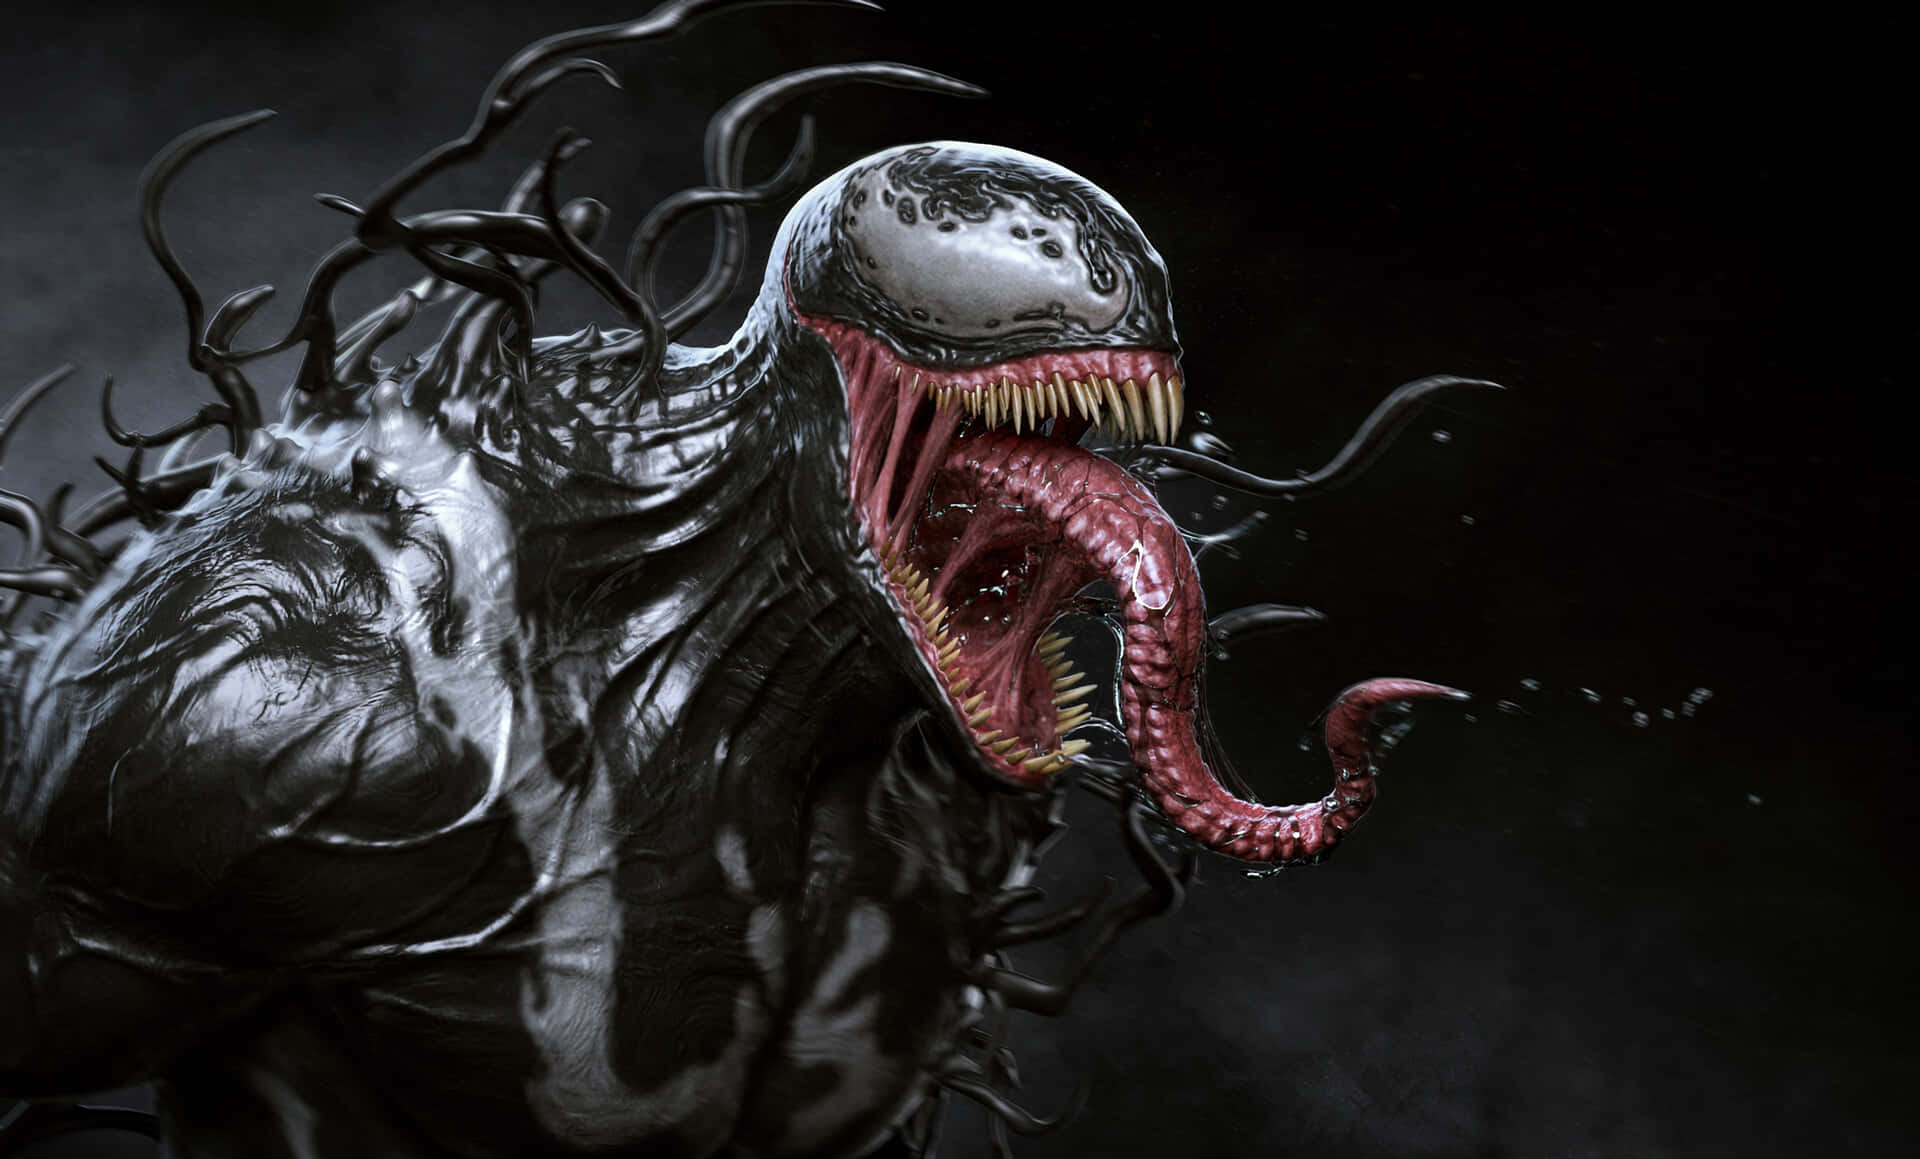 Den ultimative skurk - Venom